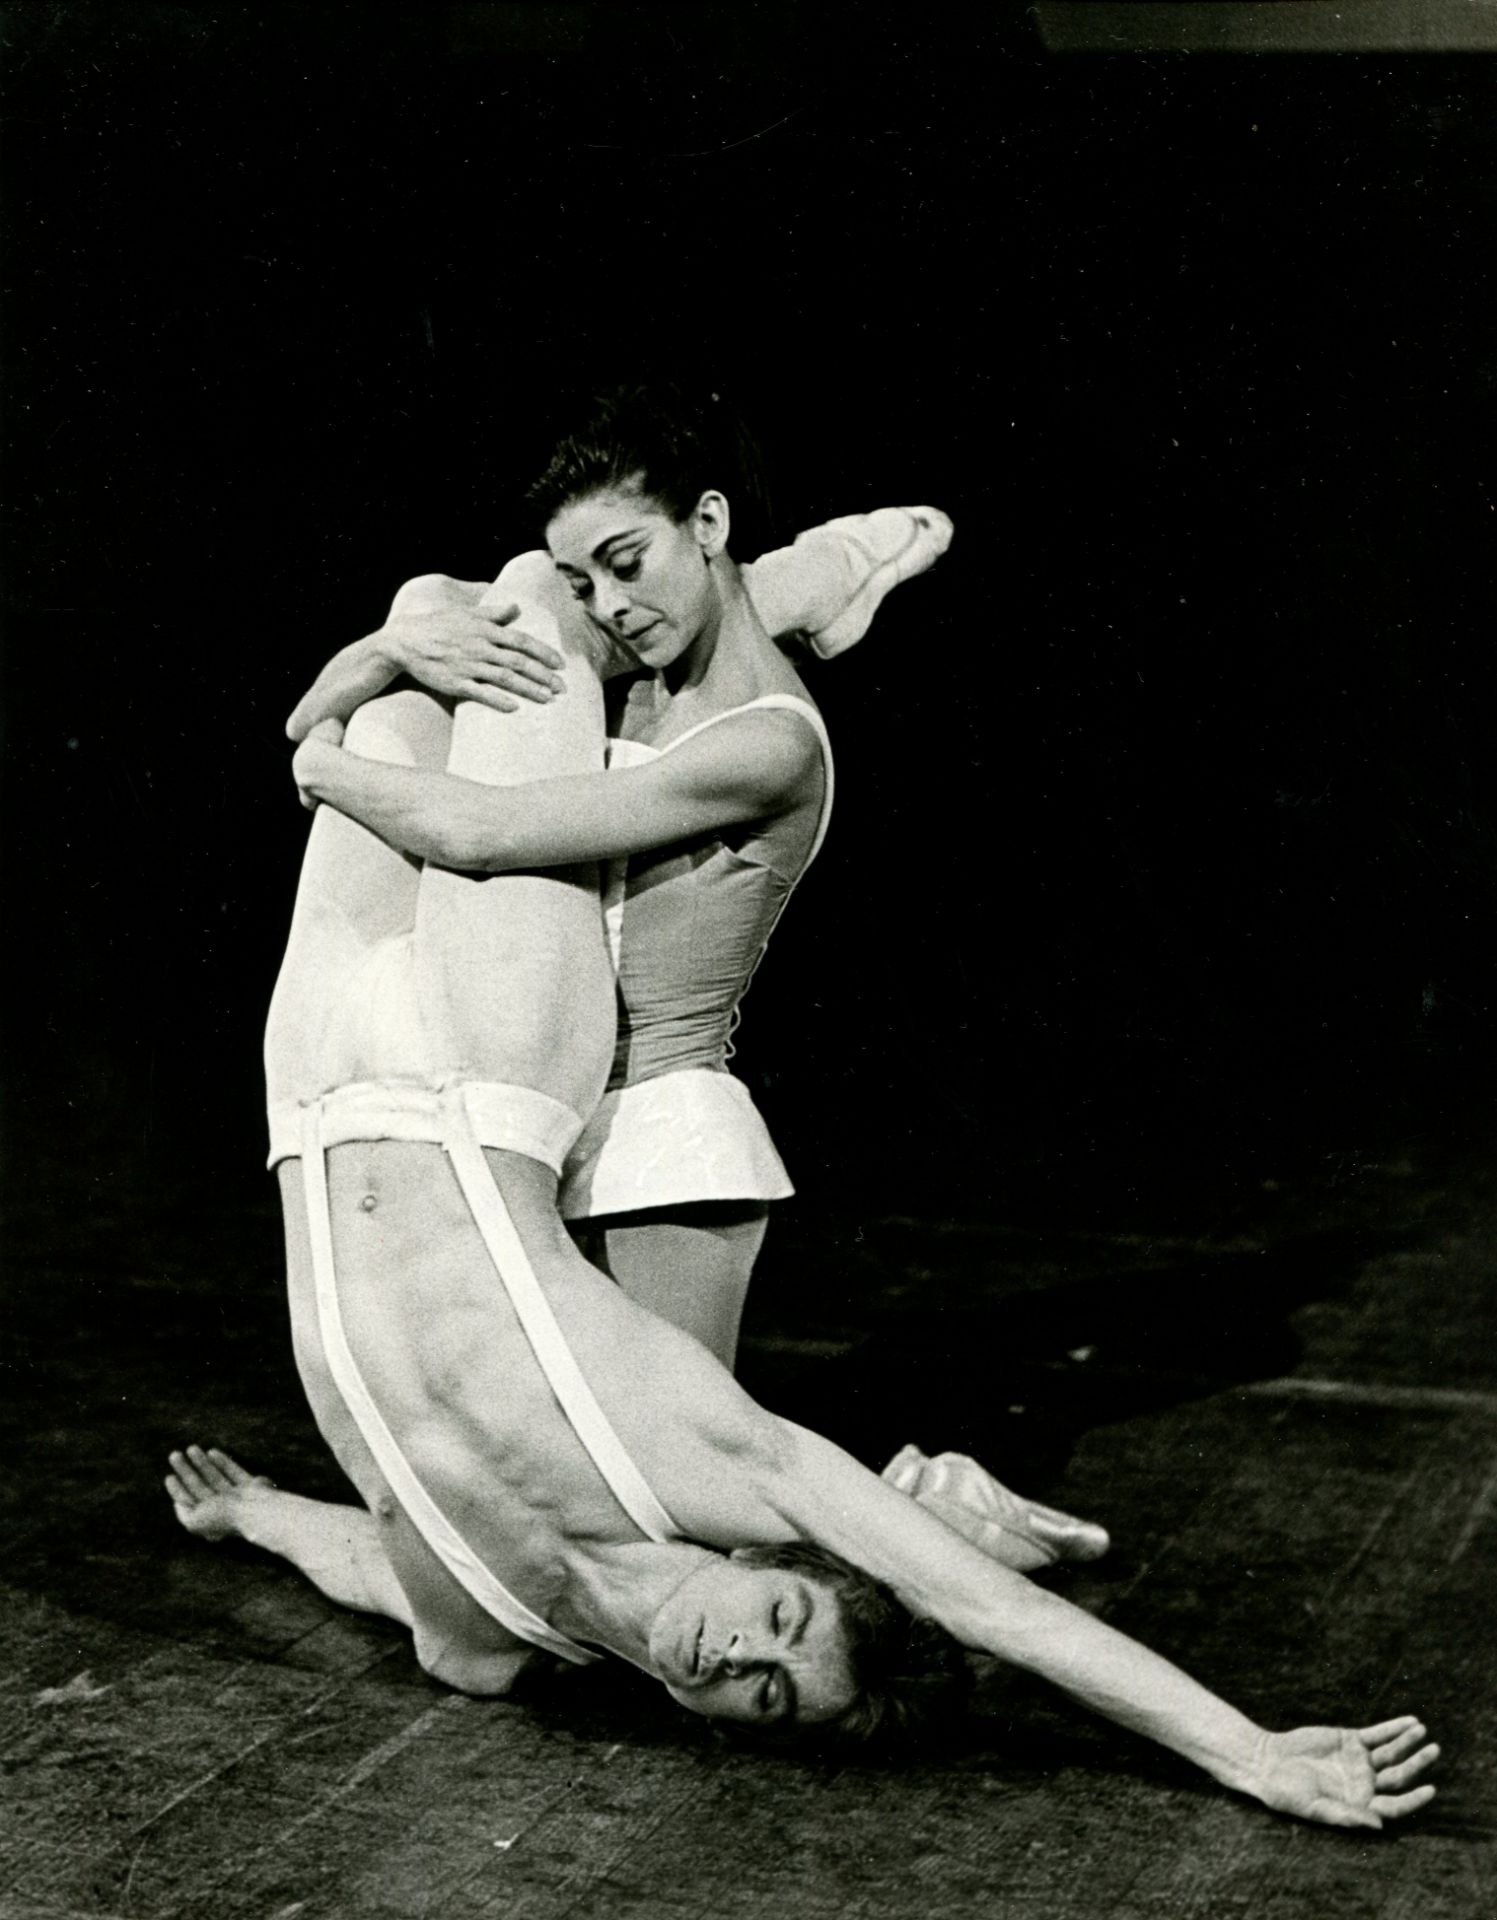 [FONTEYN & NUREYEV]: [FONTEYN MARGOT] (1919-1991) English ballerina & [NUREYEV RUDOLF] (1938-1993) - Image 16 of 17